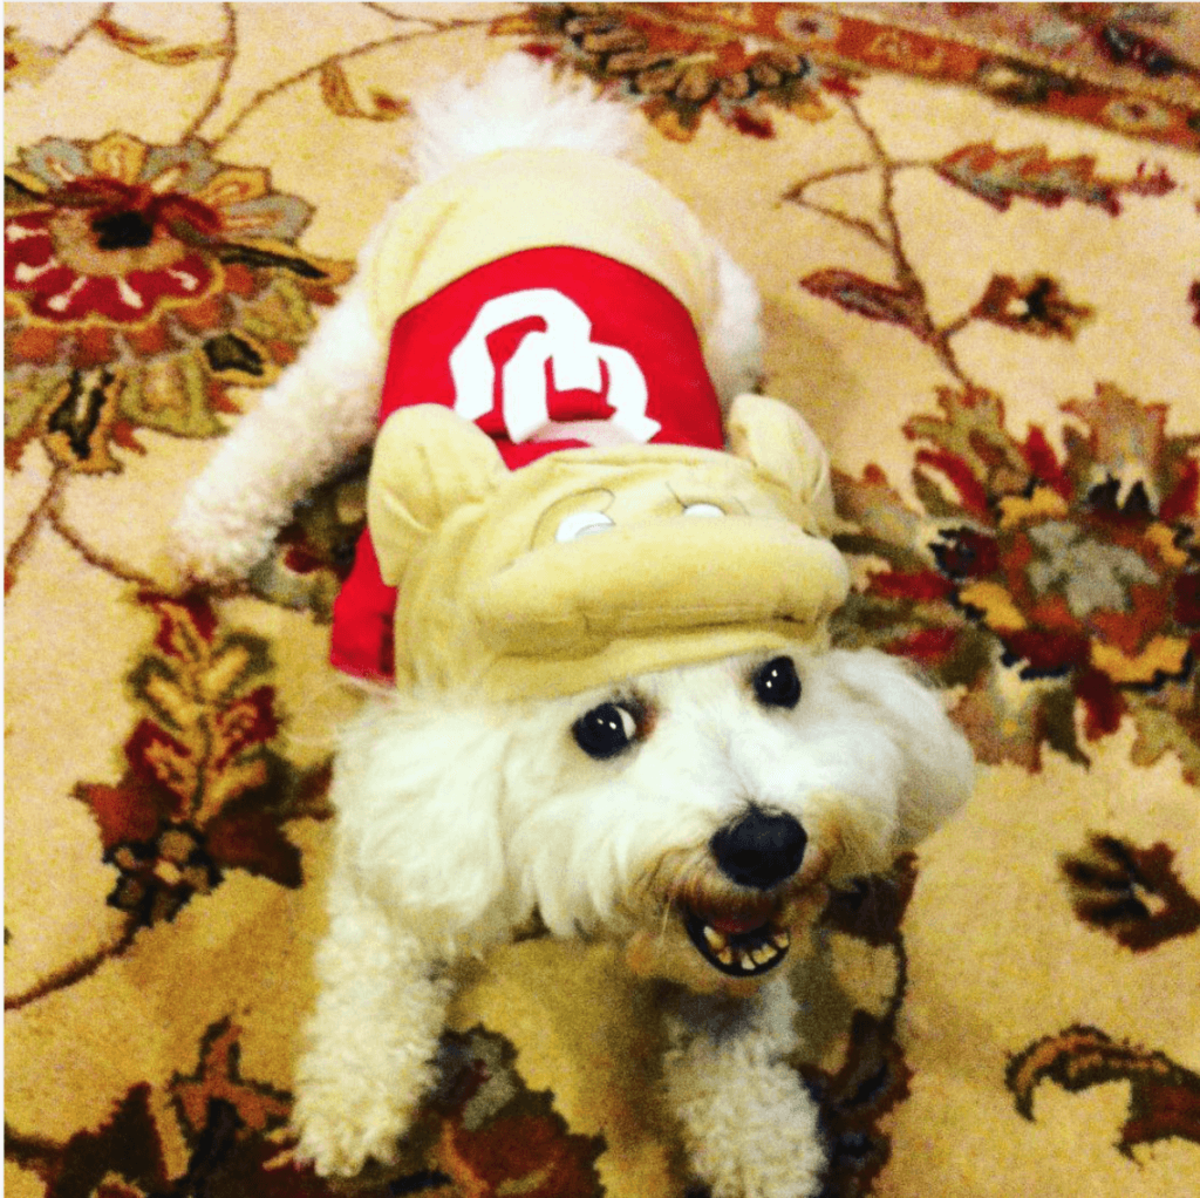 a dog wears a Oklahoma university costume.